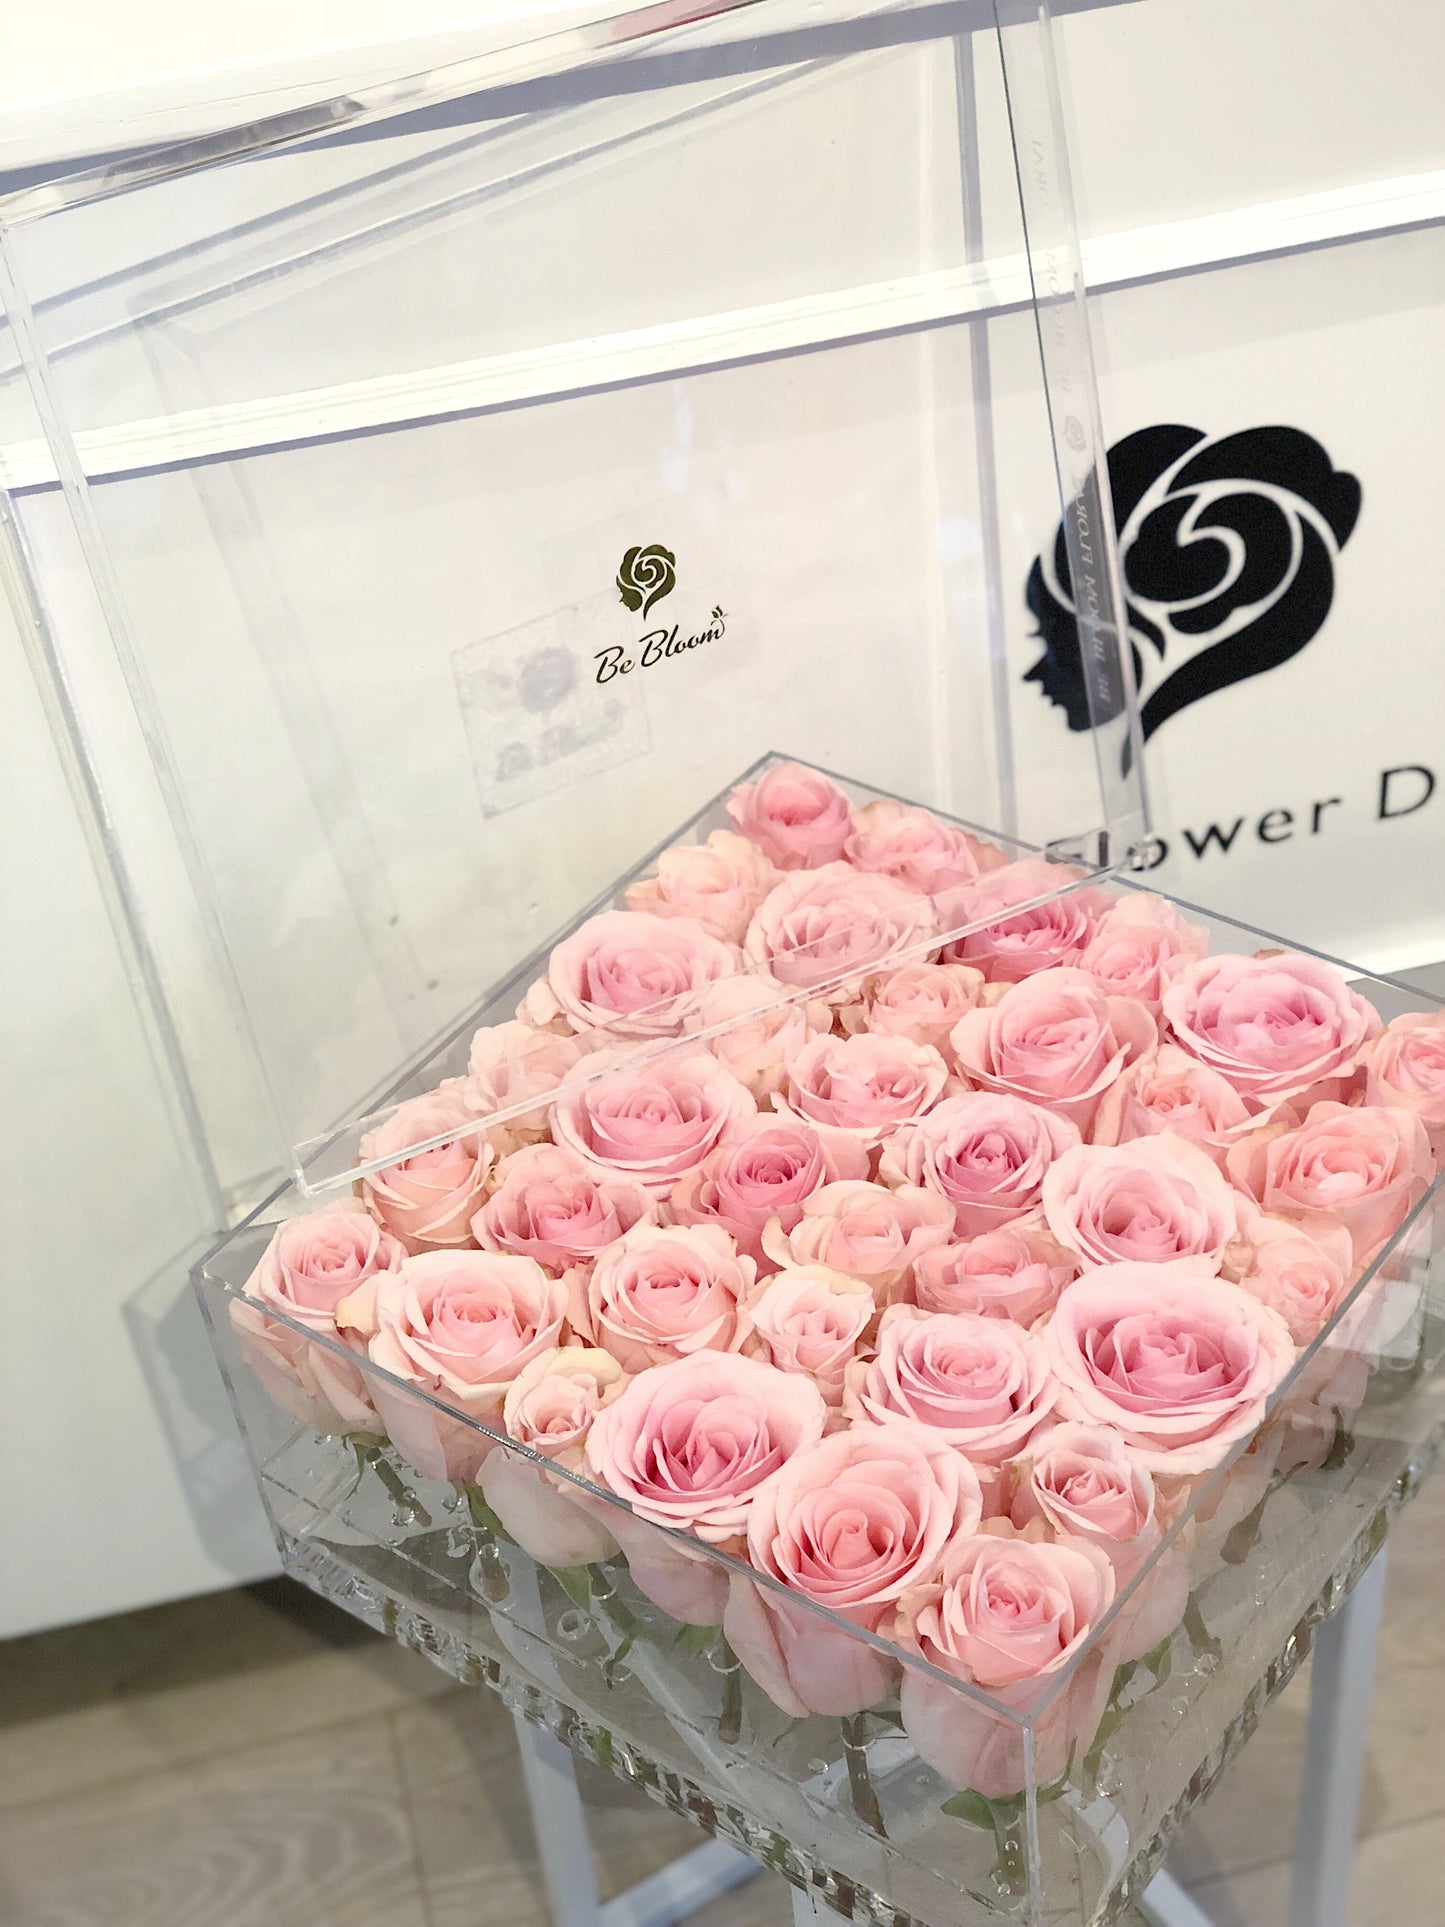 "Pure Love" Rose Box